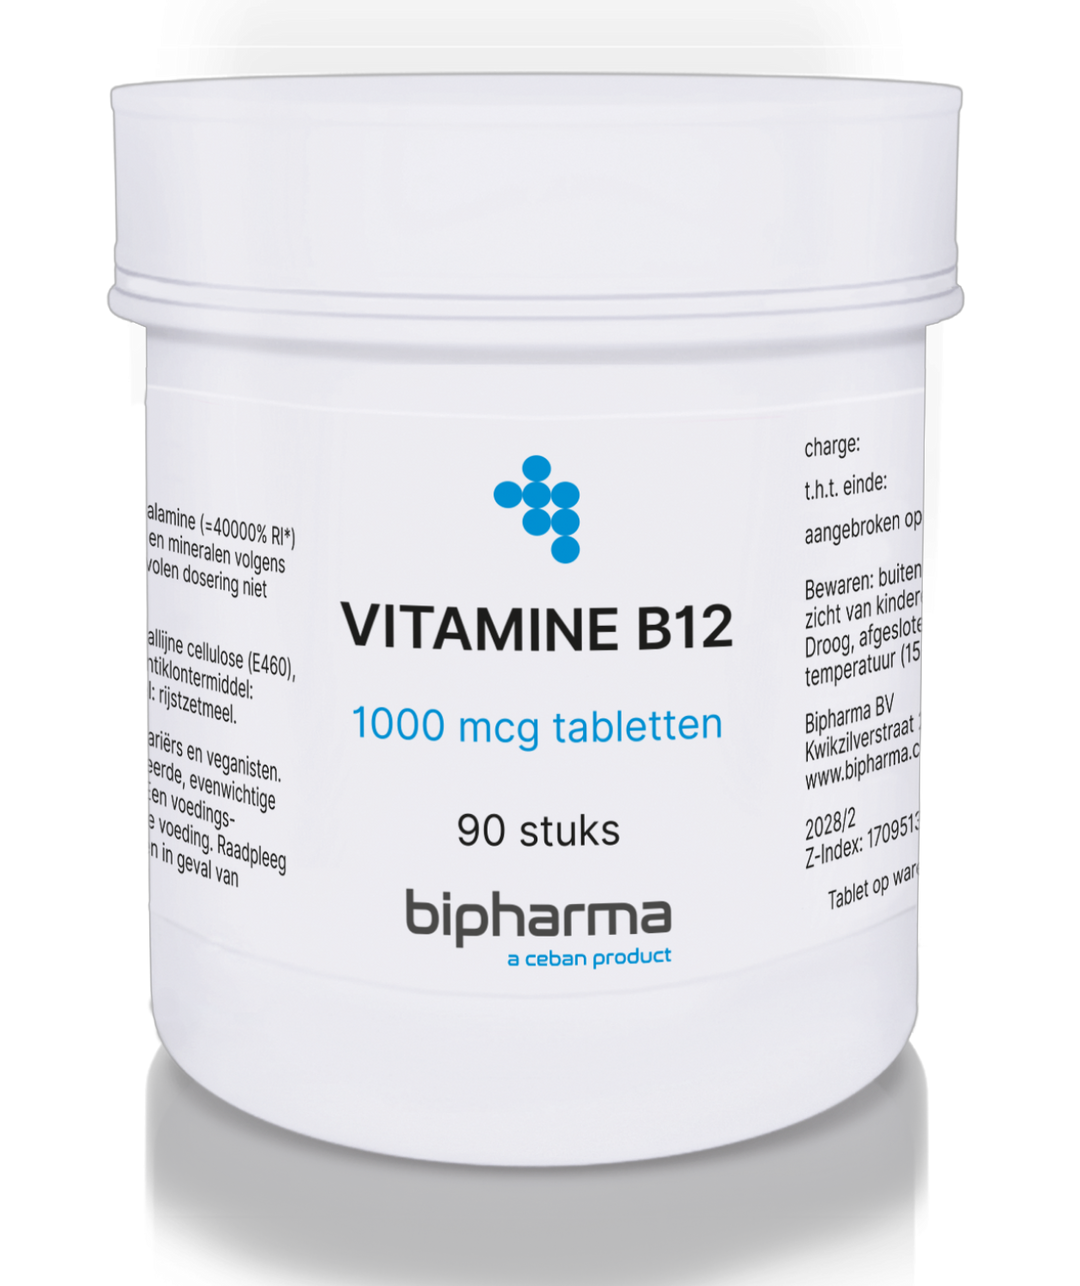 Vitamine B12 Tablet 1000mcg Bipharma - BIPHARMA BV - Huidproducten.nl